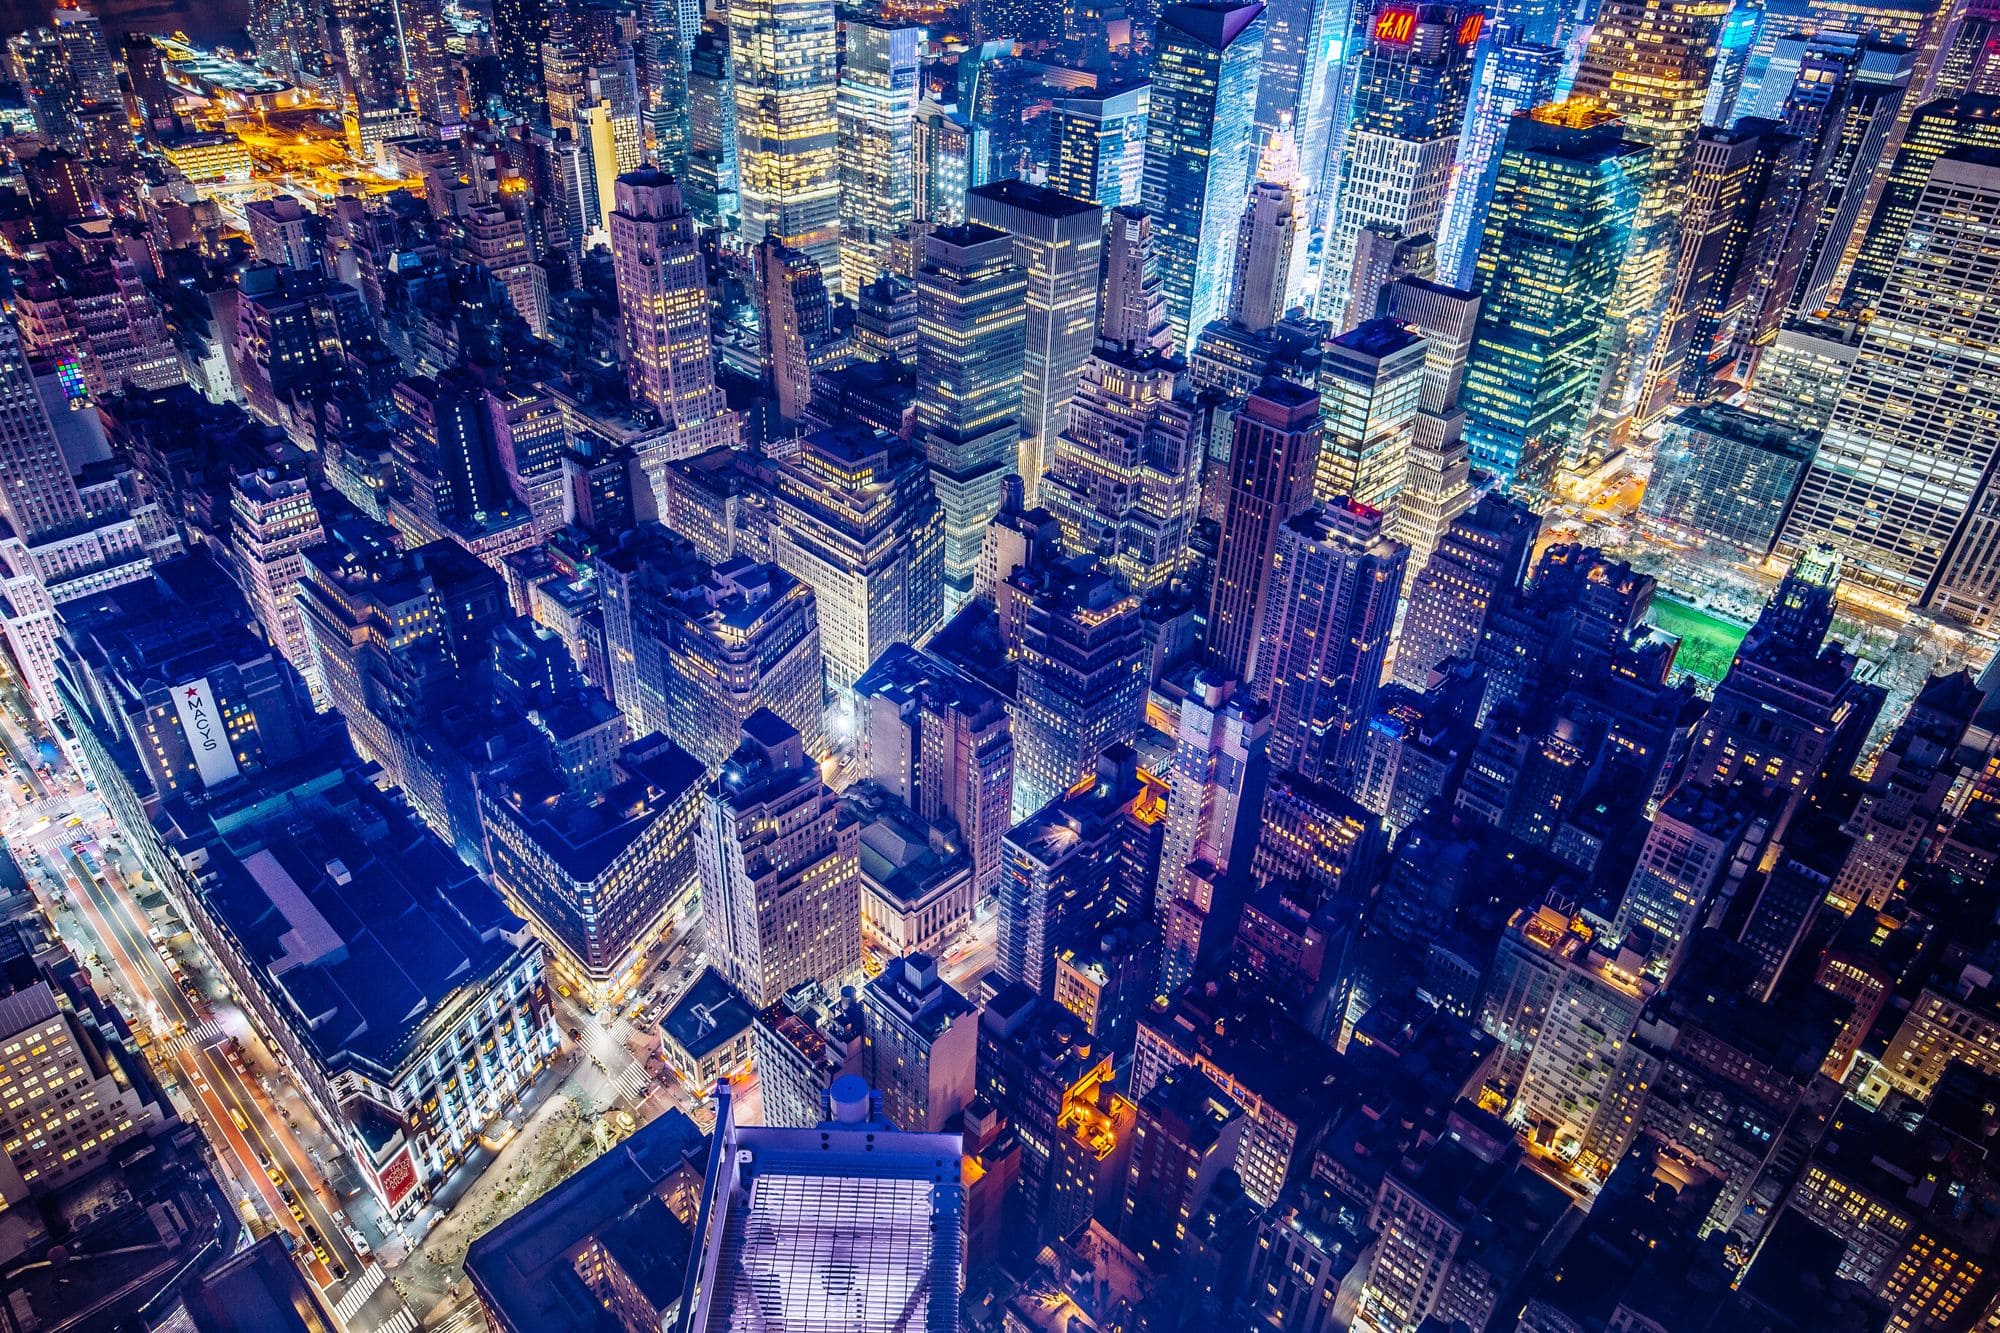 Vista aerea di una smart city urbana